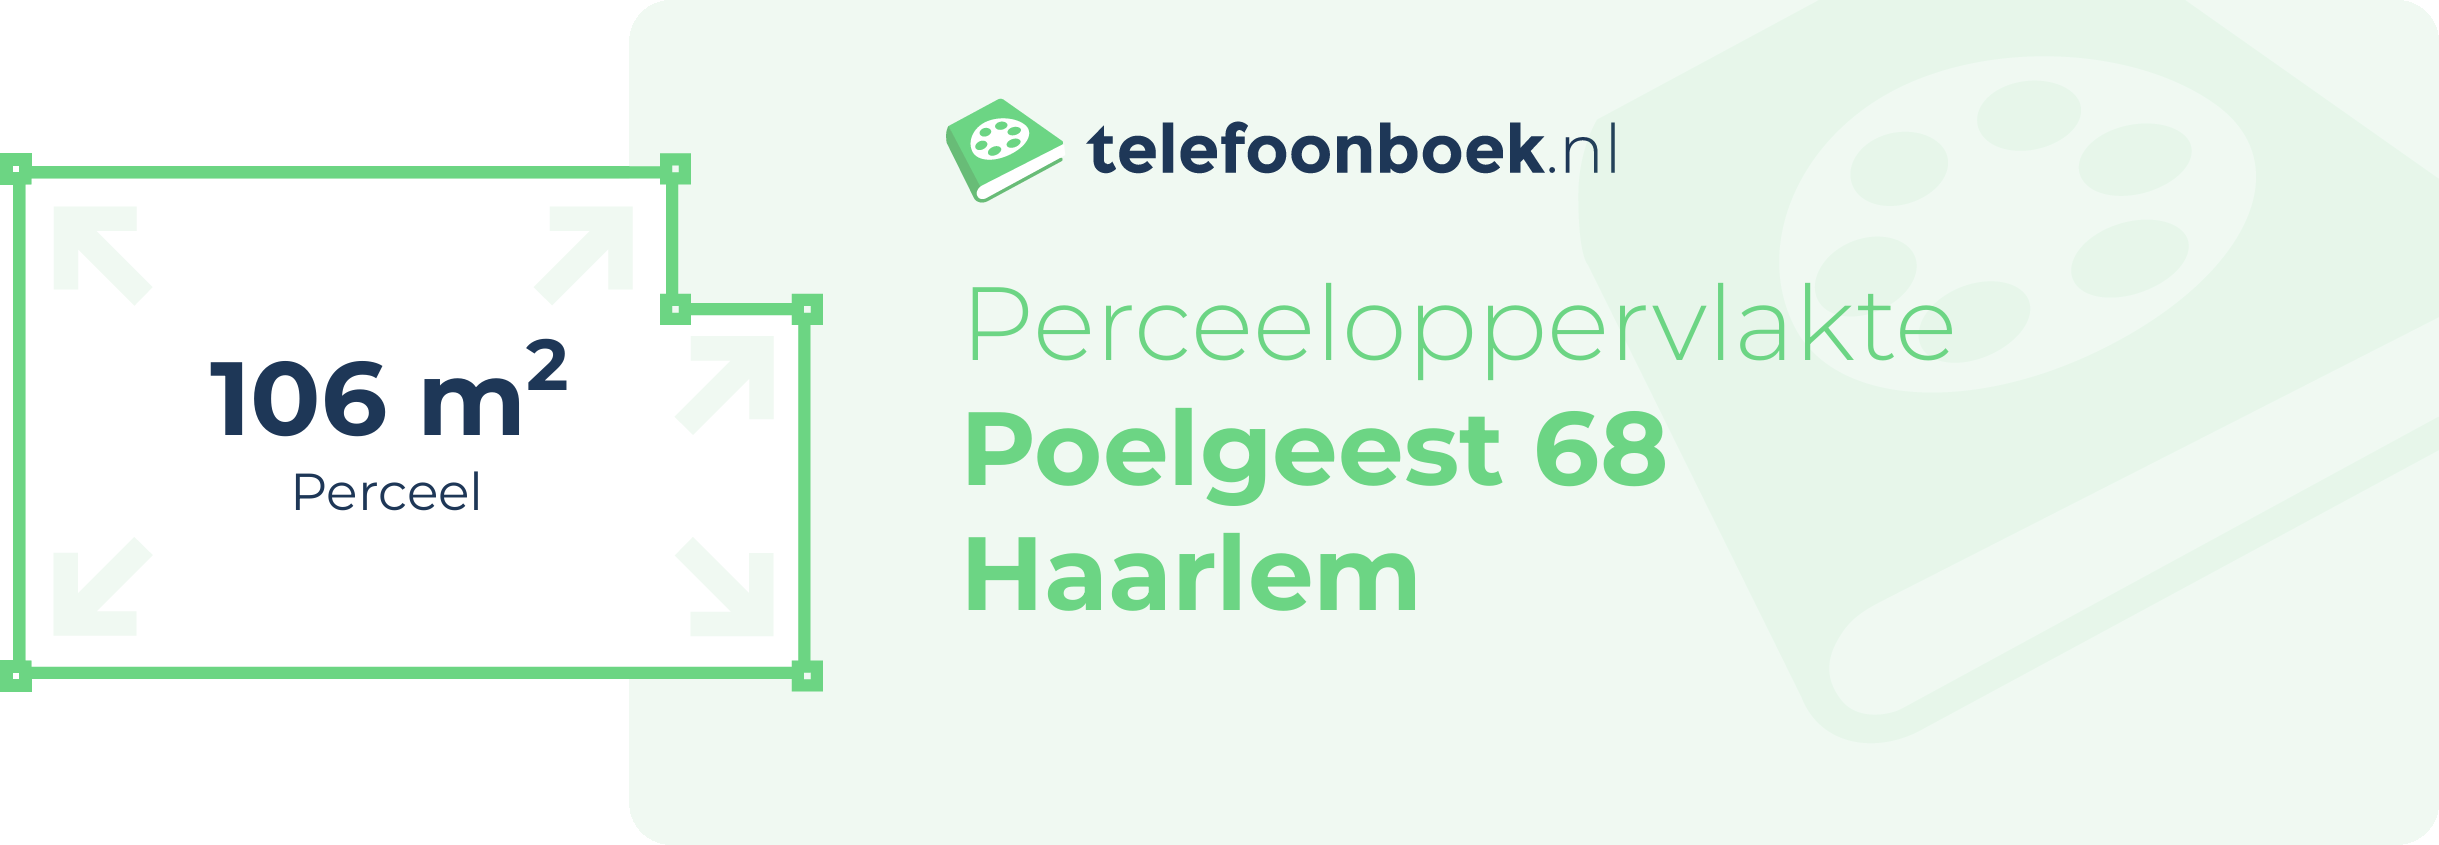 Perceeloppervlakte Poelgeest 68 Haarlem